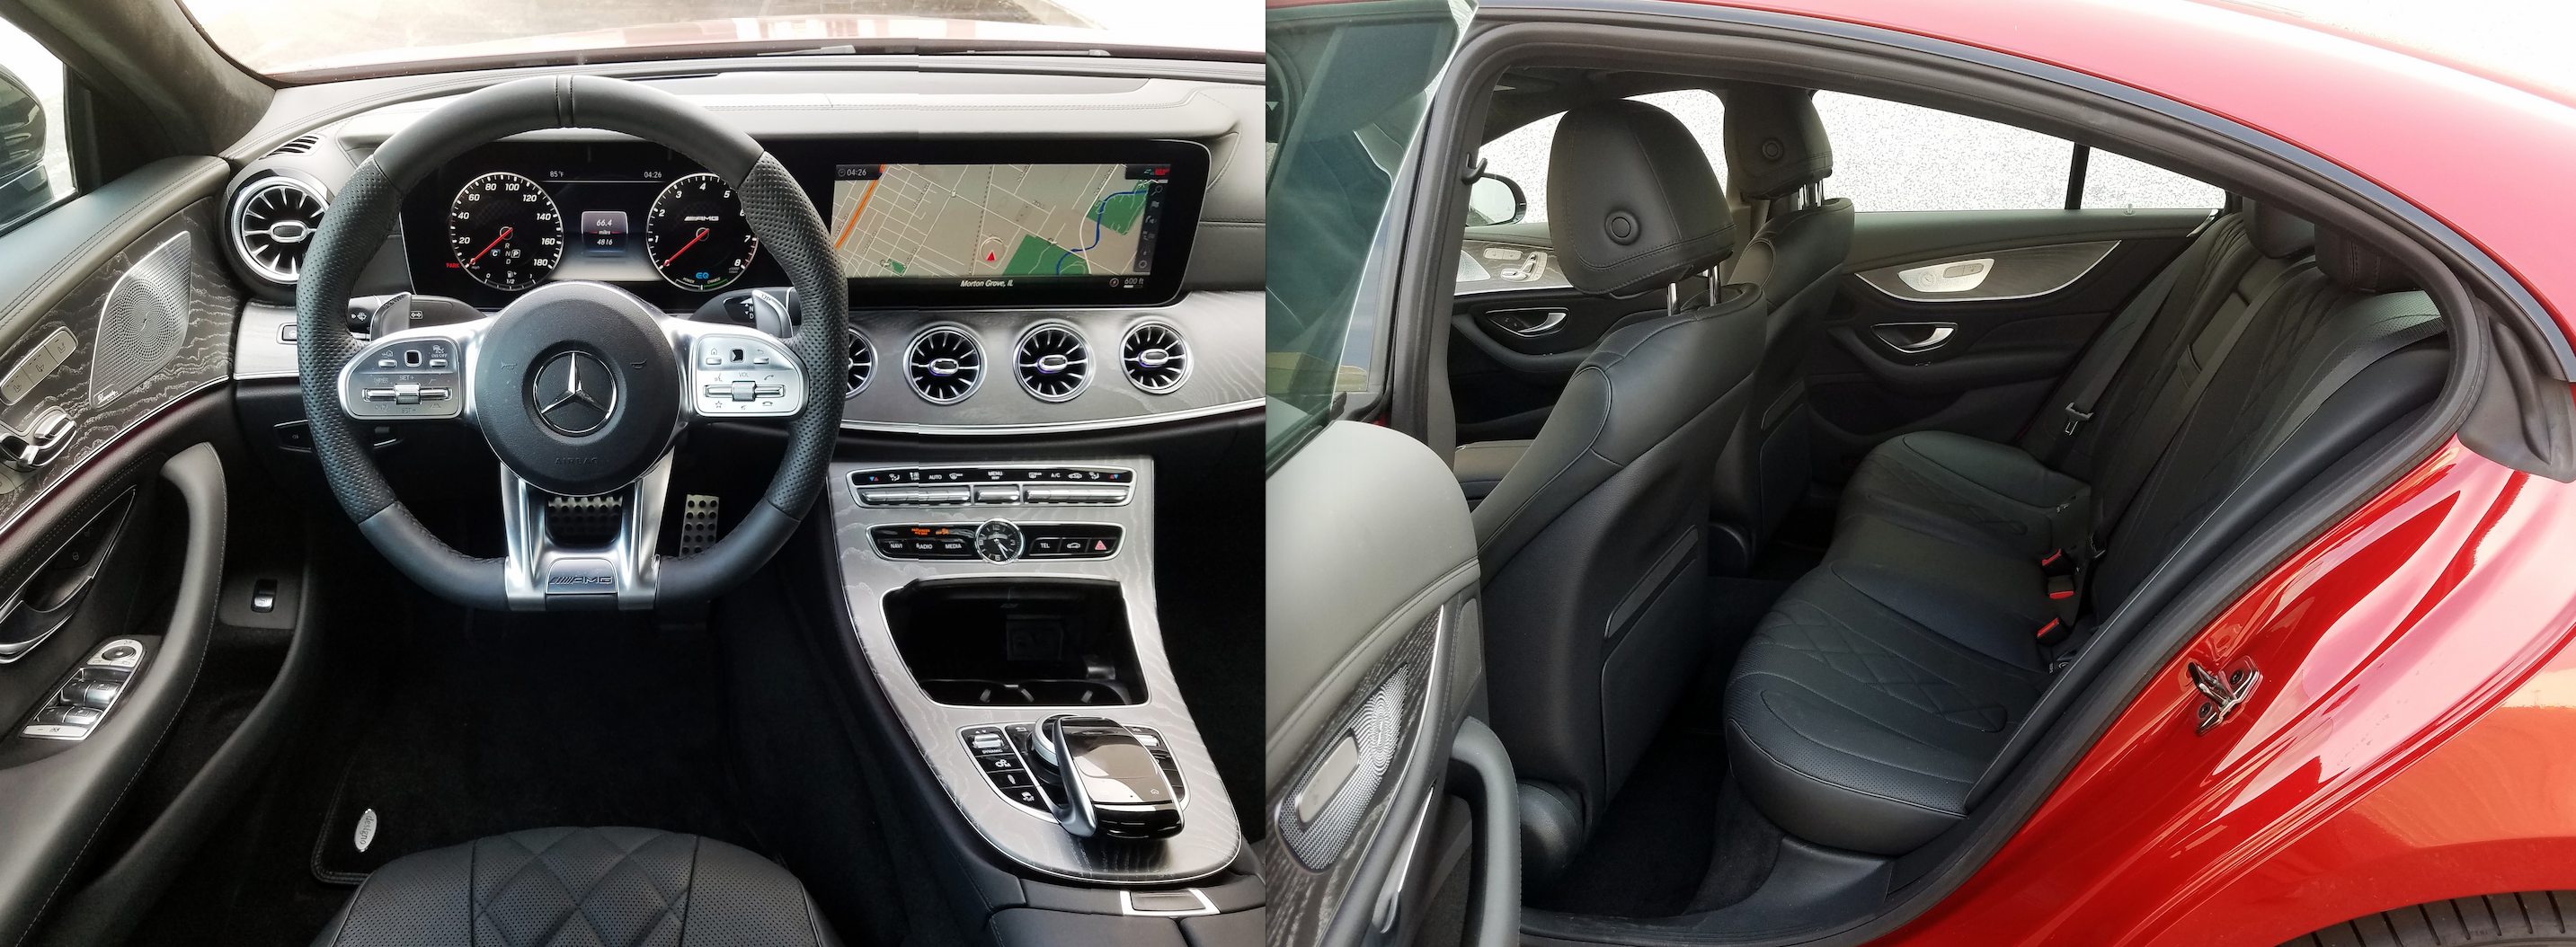 2019 Mercedes-Benz AMG CLS53 Cabin 